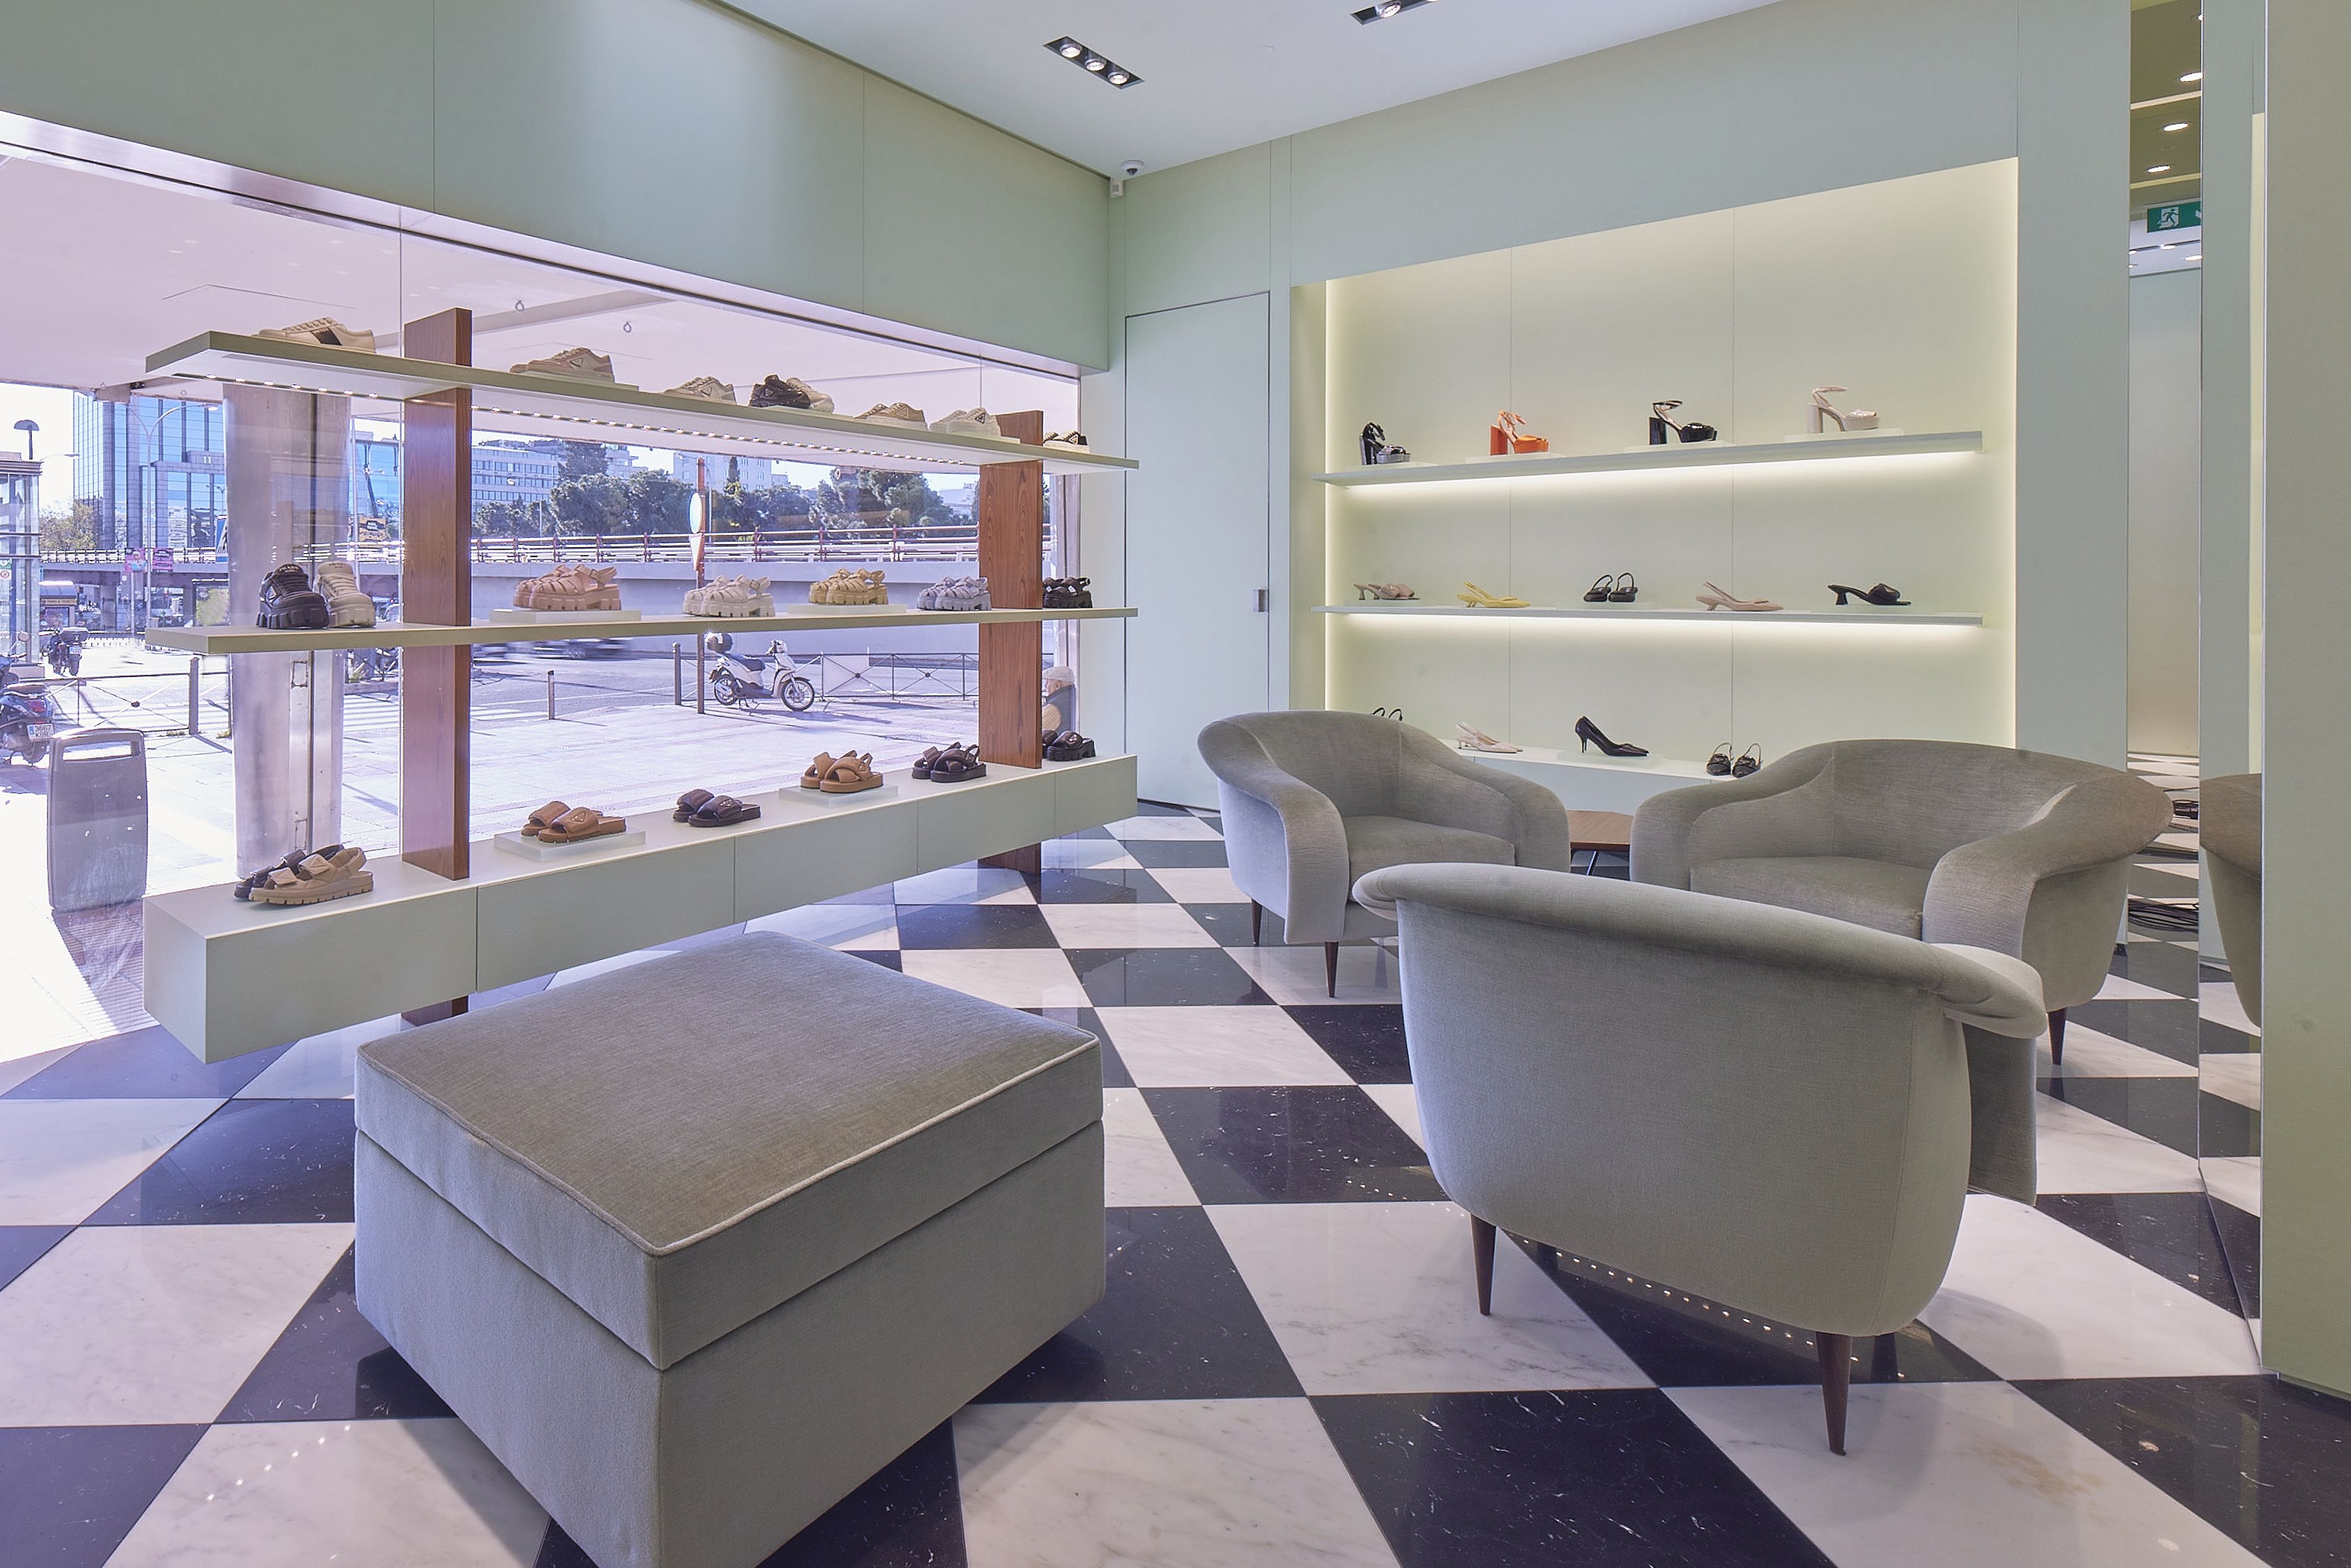 Photos at Louis Vuitton - Castellana - Madrid, Madrid